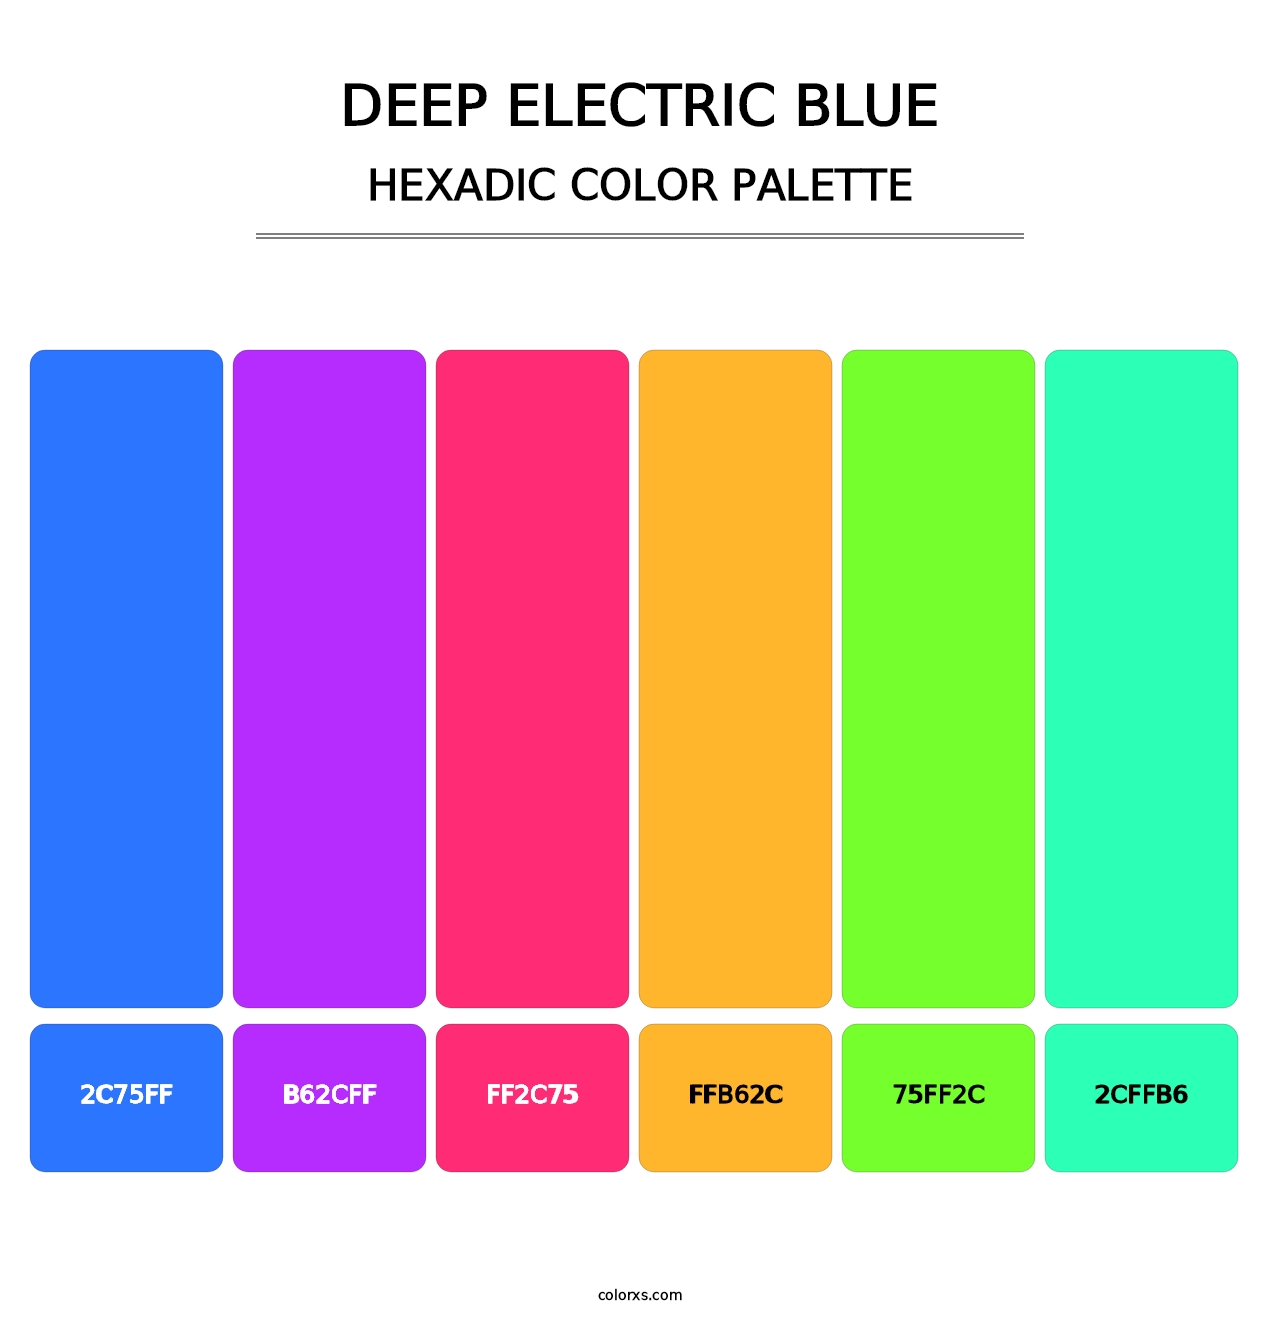 Deep Electric Blue - Hexadic Color Palette